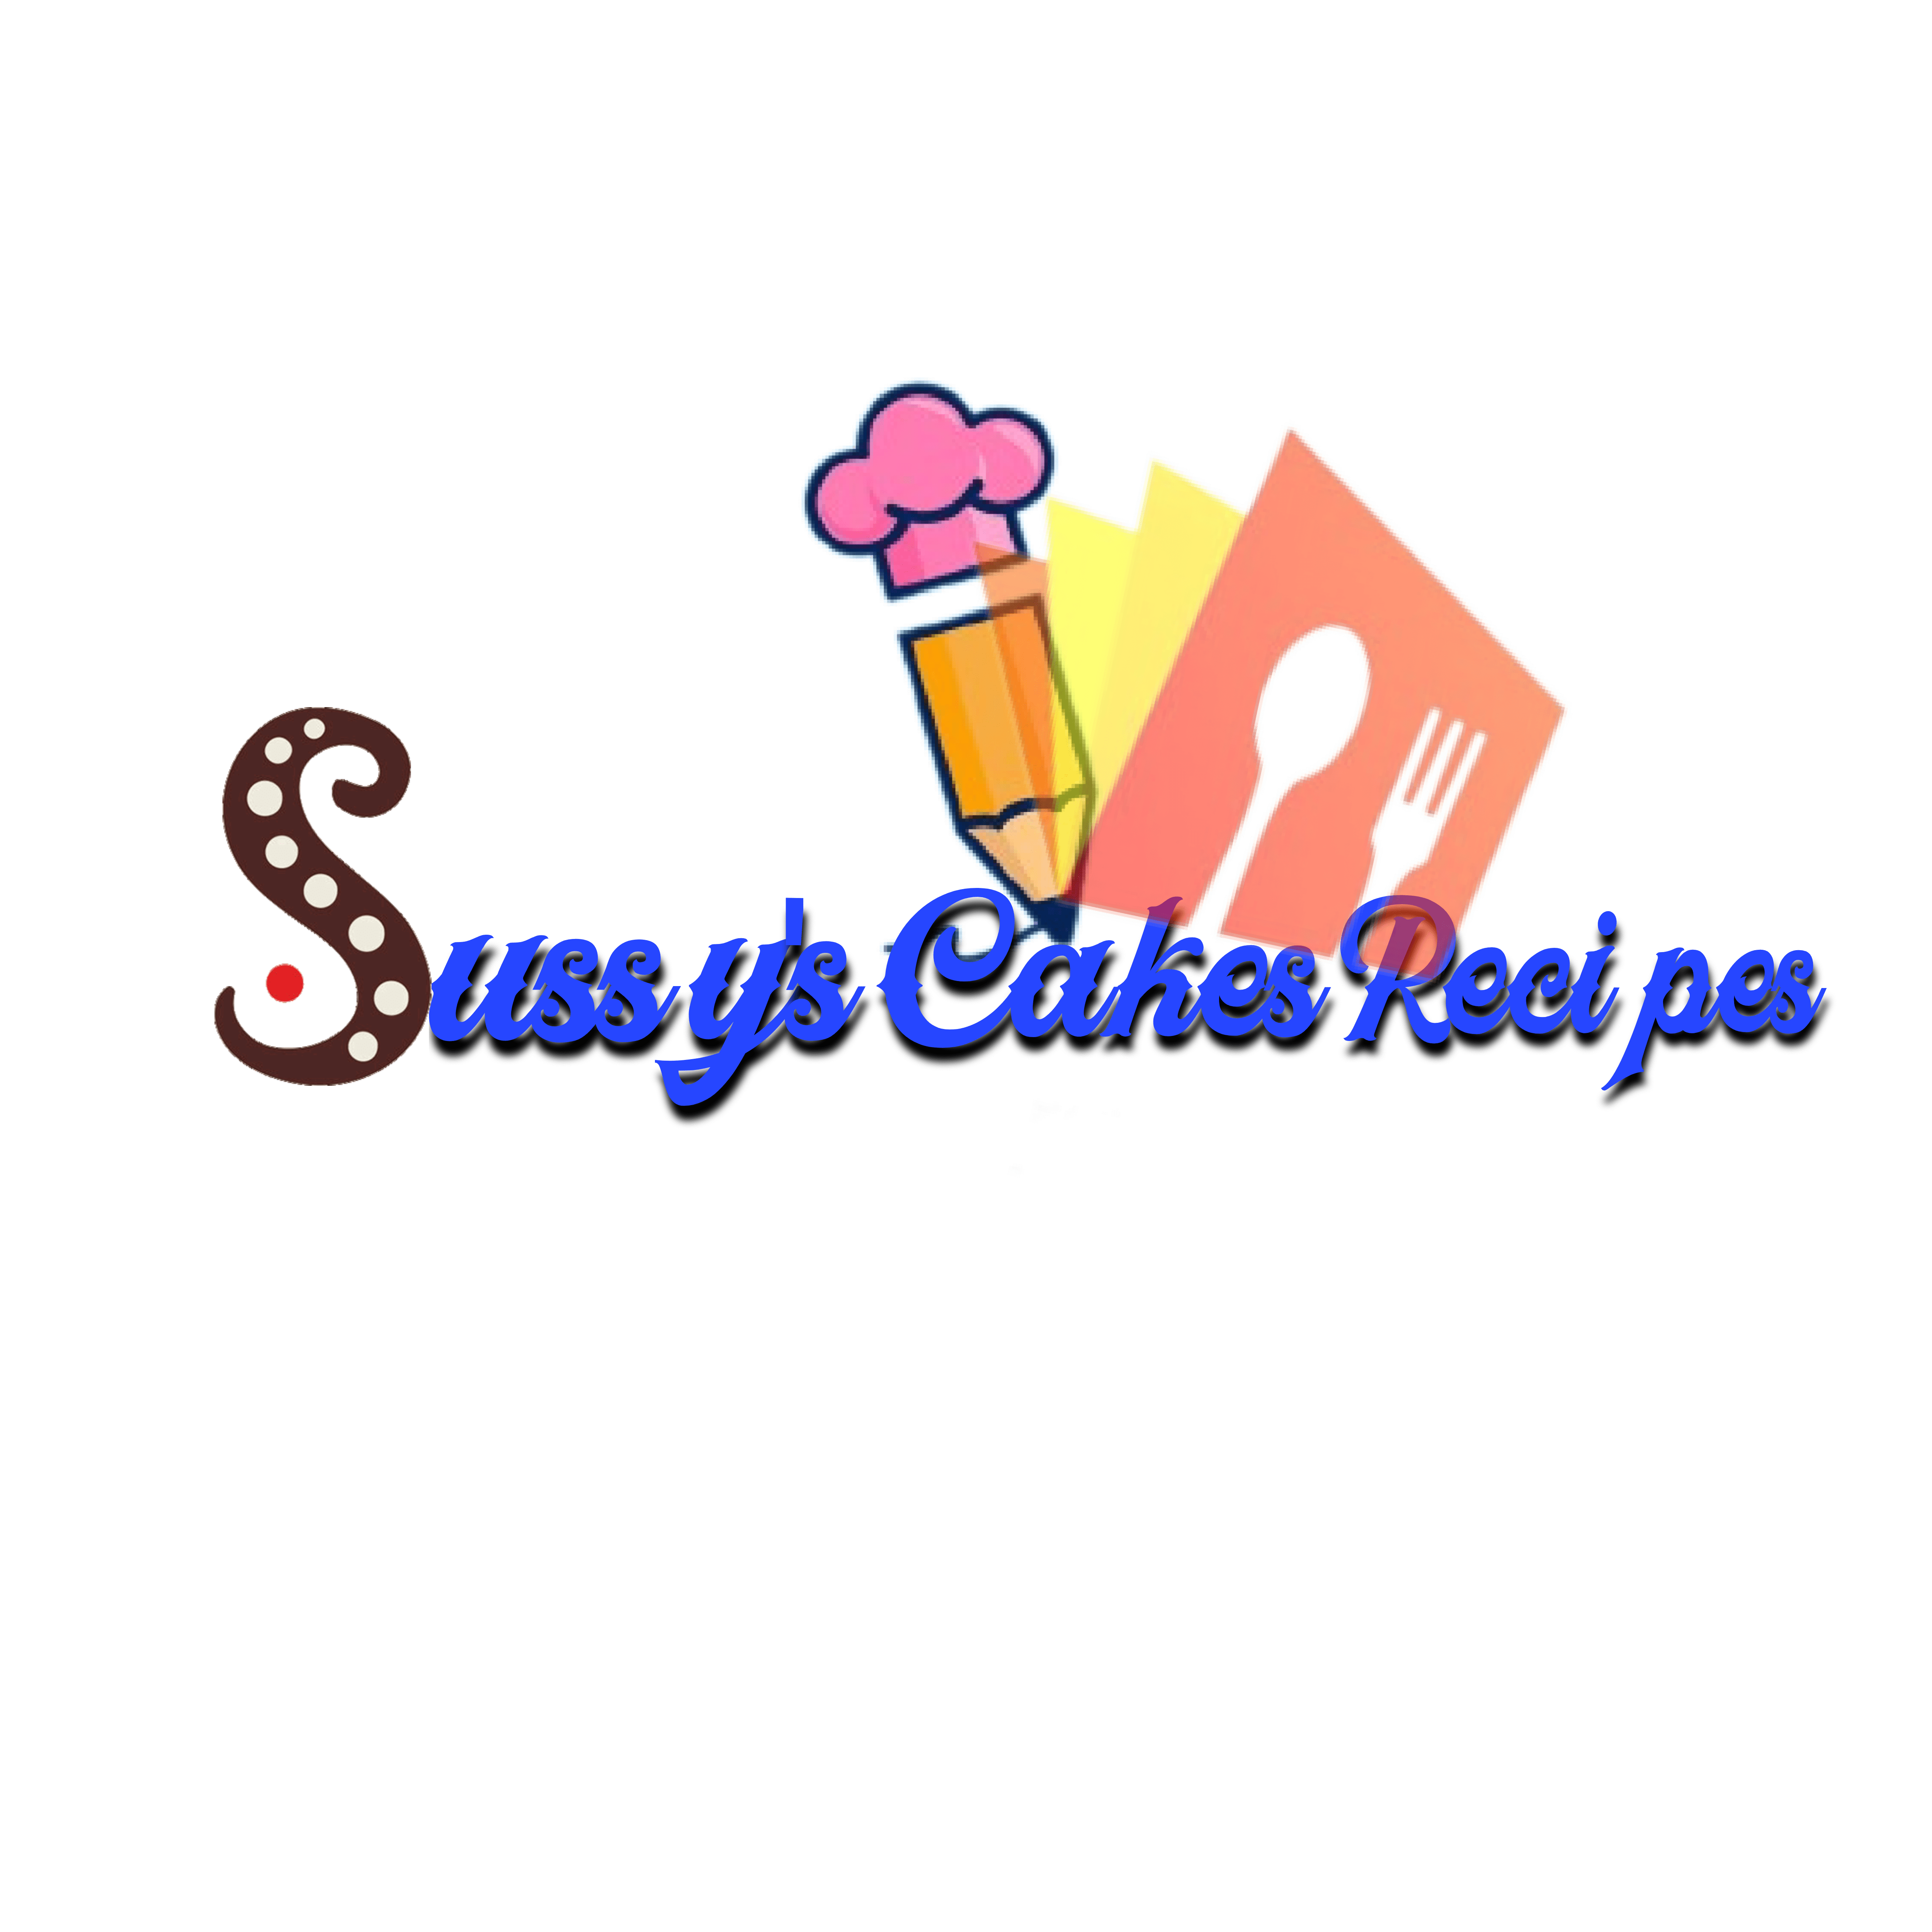 Sussy's Cakes Recipe logo